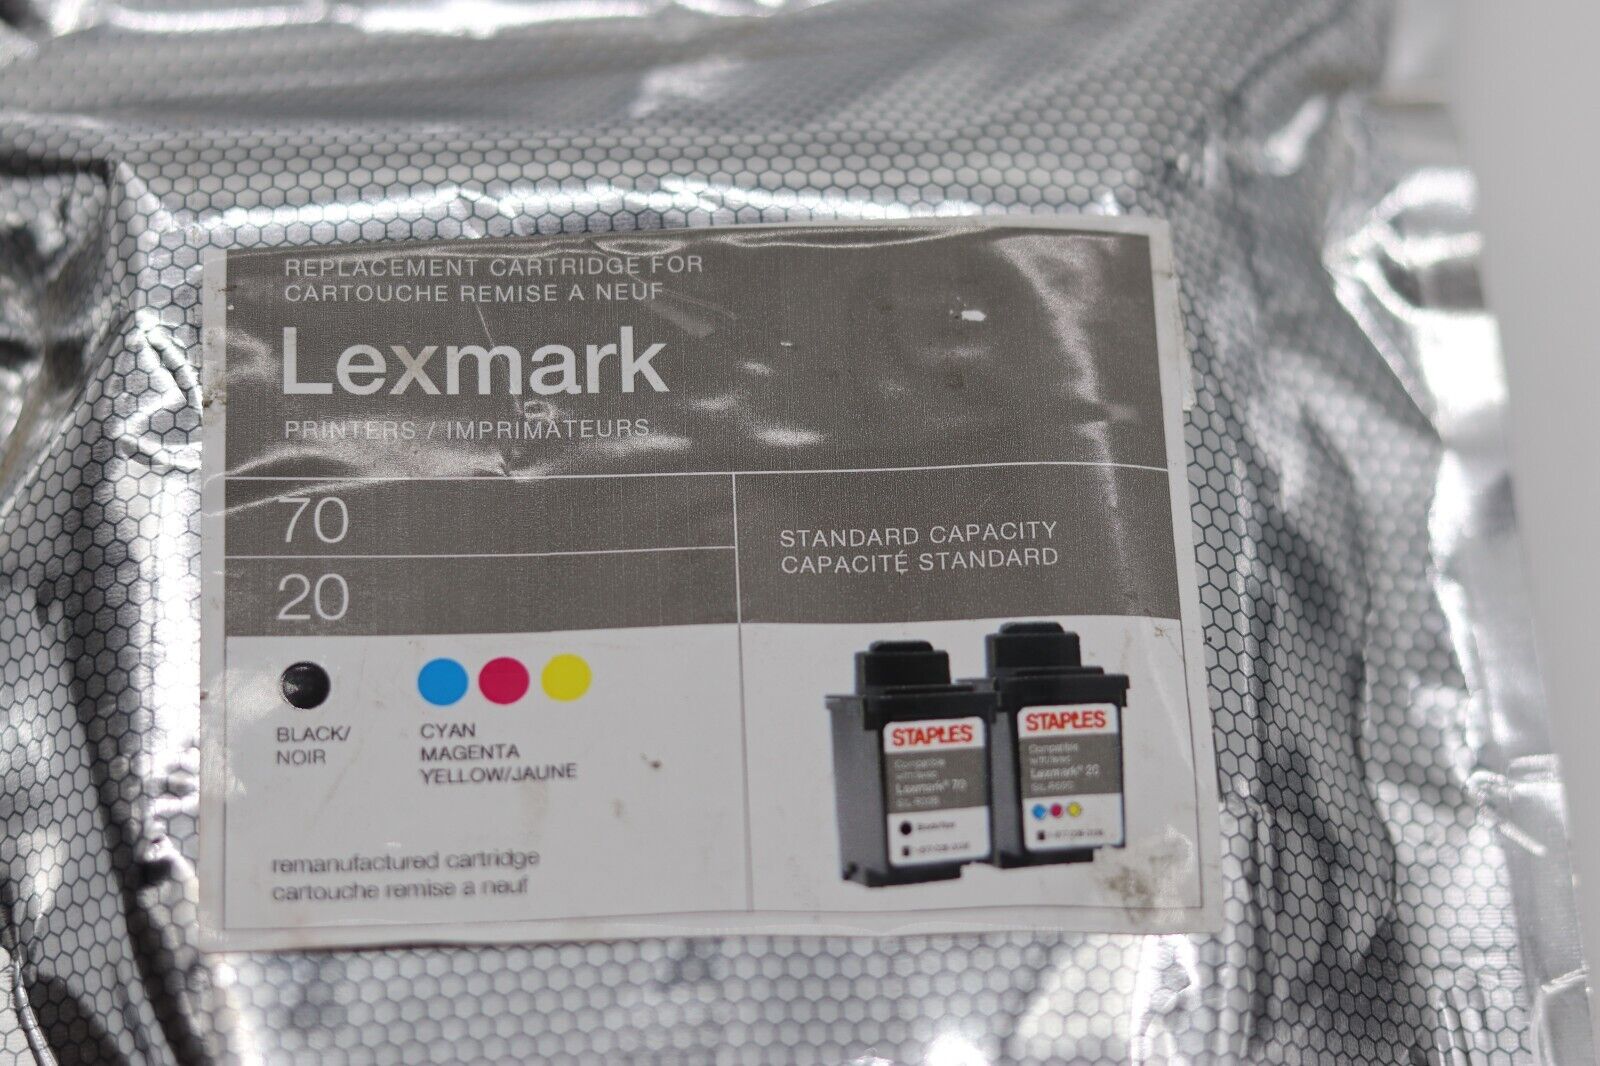 Lexmark 70/20 (12A1970/15M0120) Ink Cartridge 2-Pack GENUINE NEW 